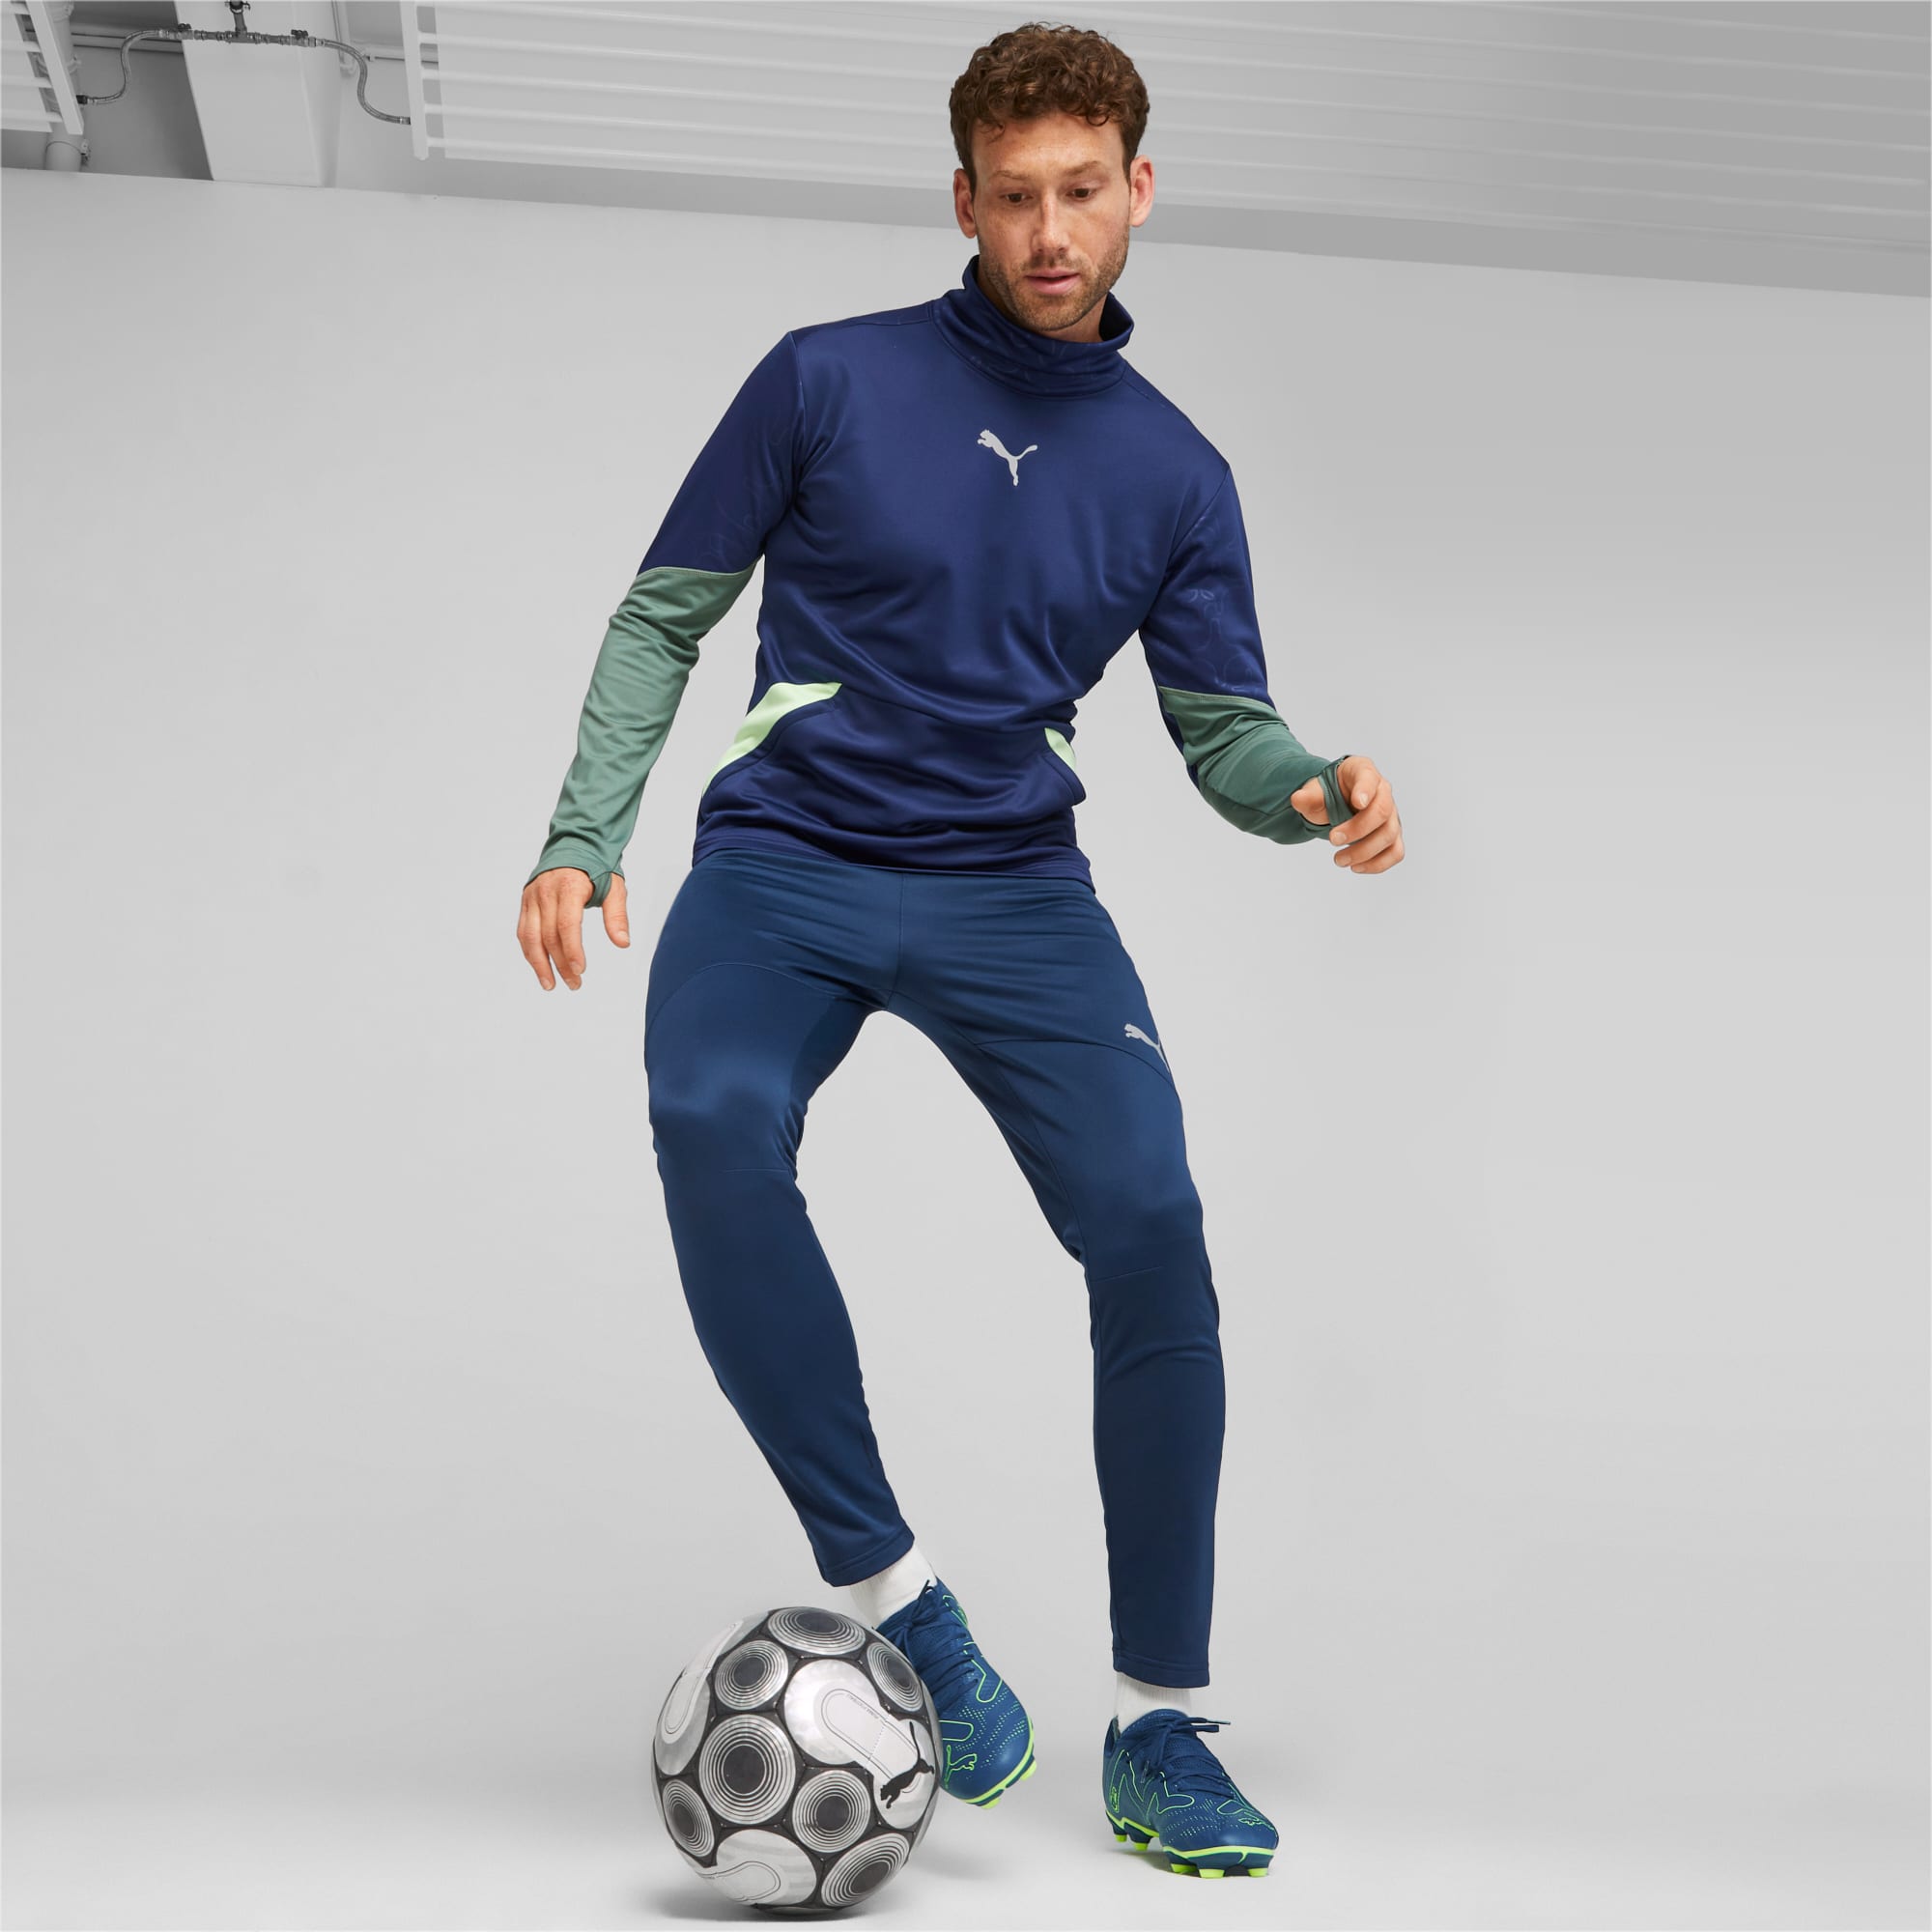 PUMA Chaussures De Football FUTURE PLAY FG/AG Pour Homme, Bleu/Vert